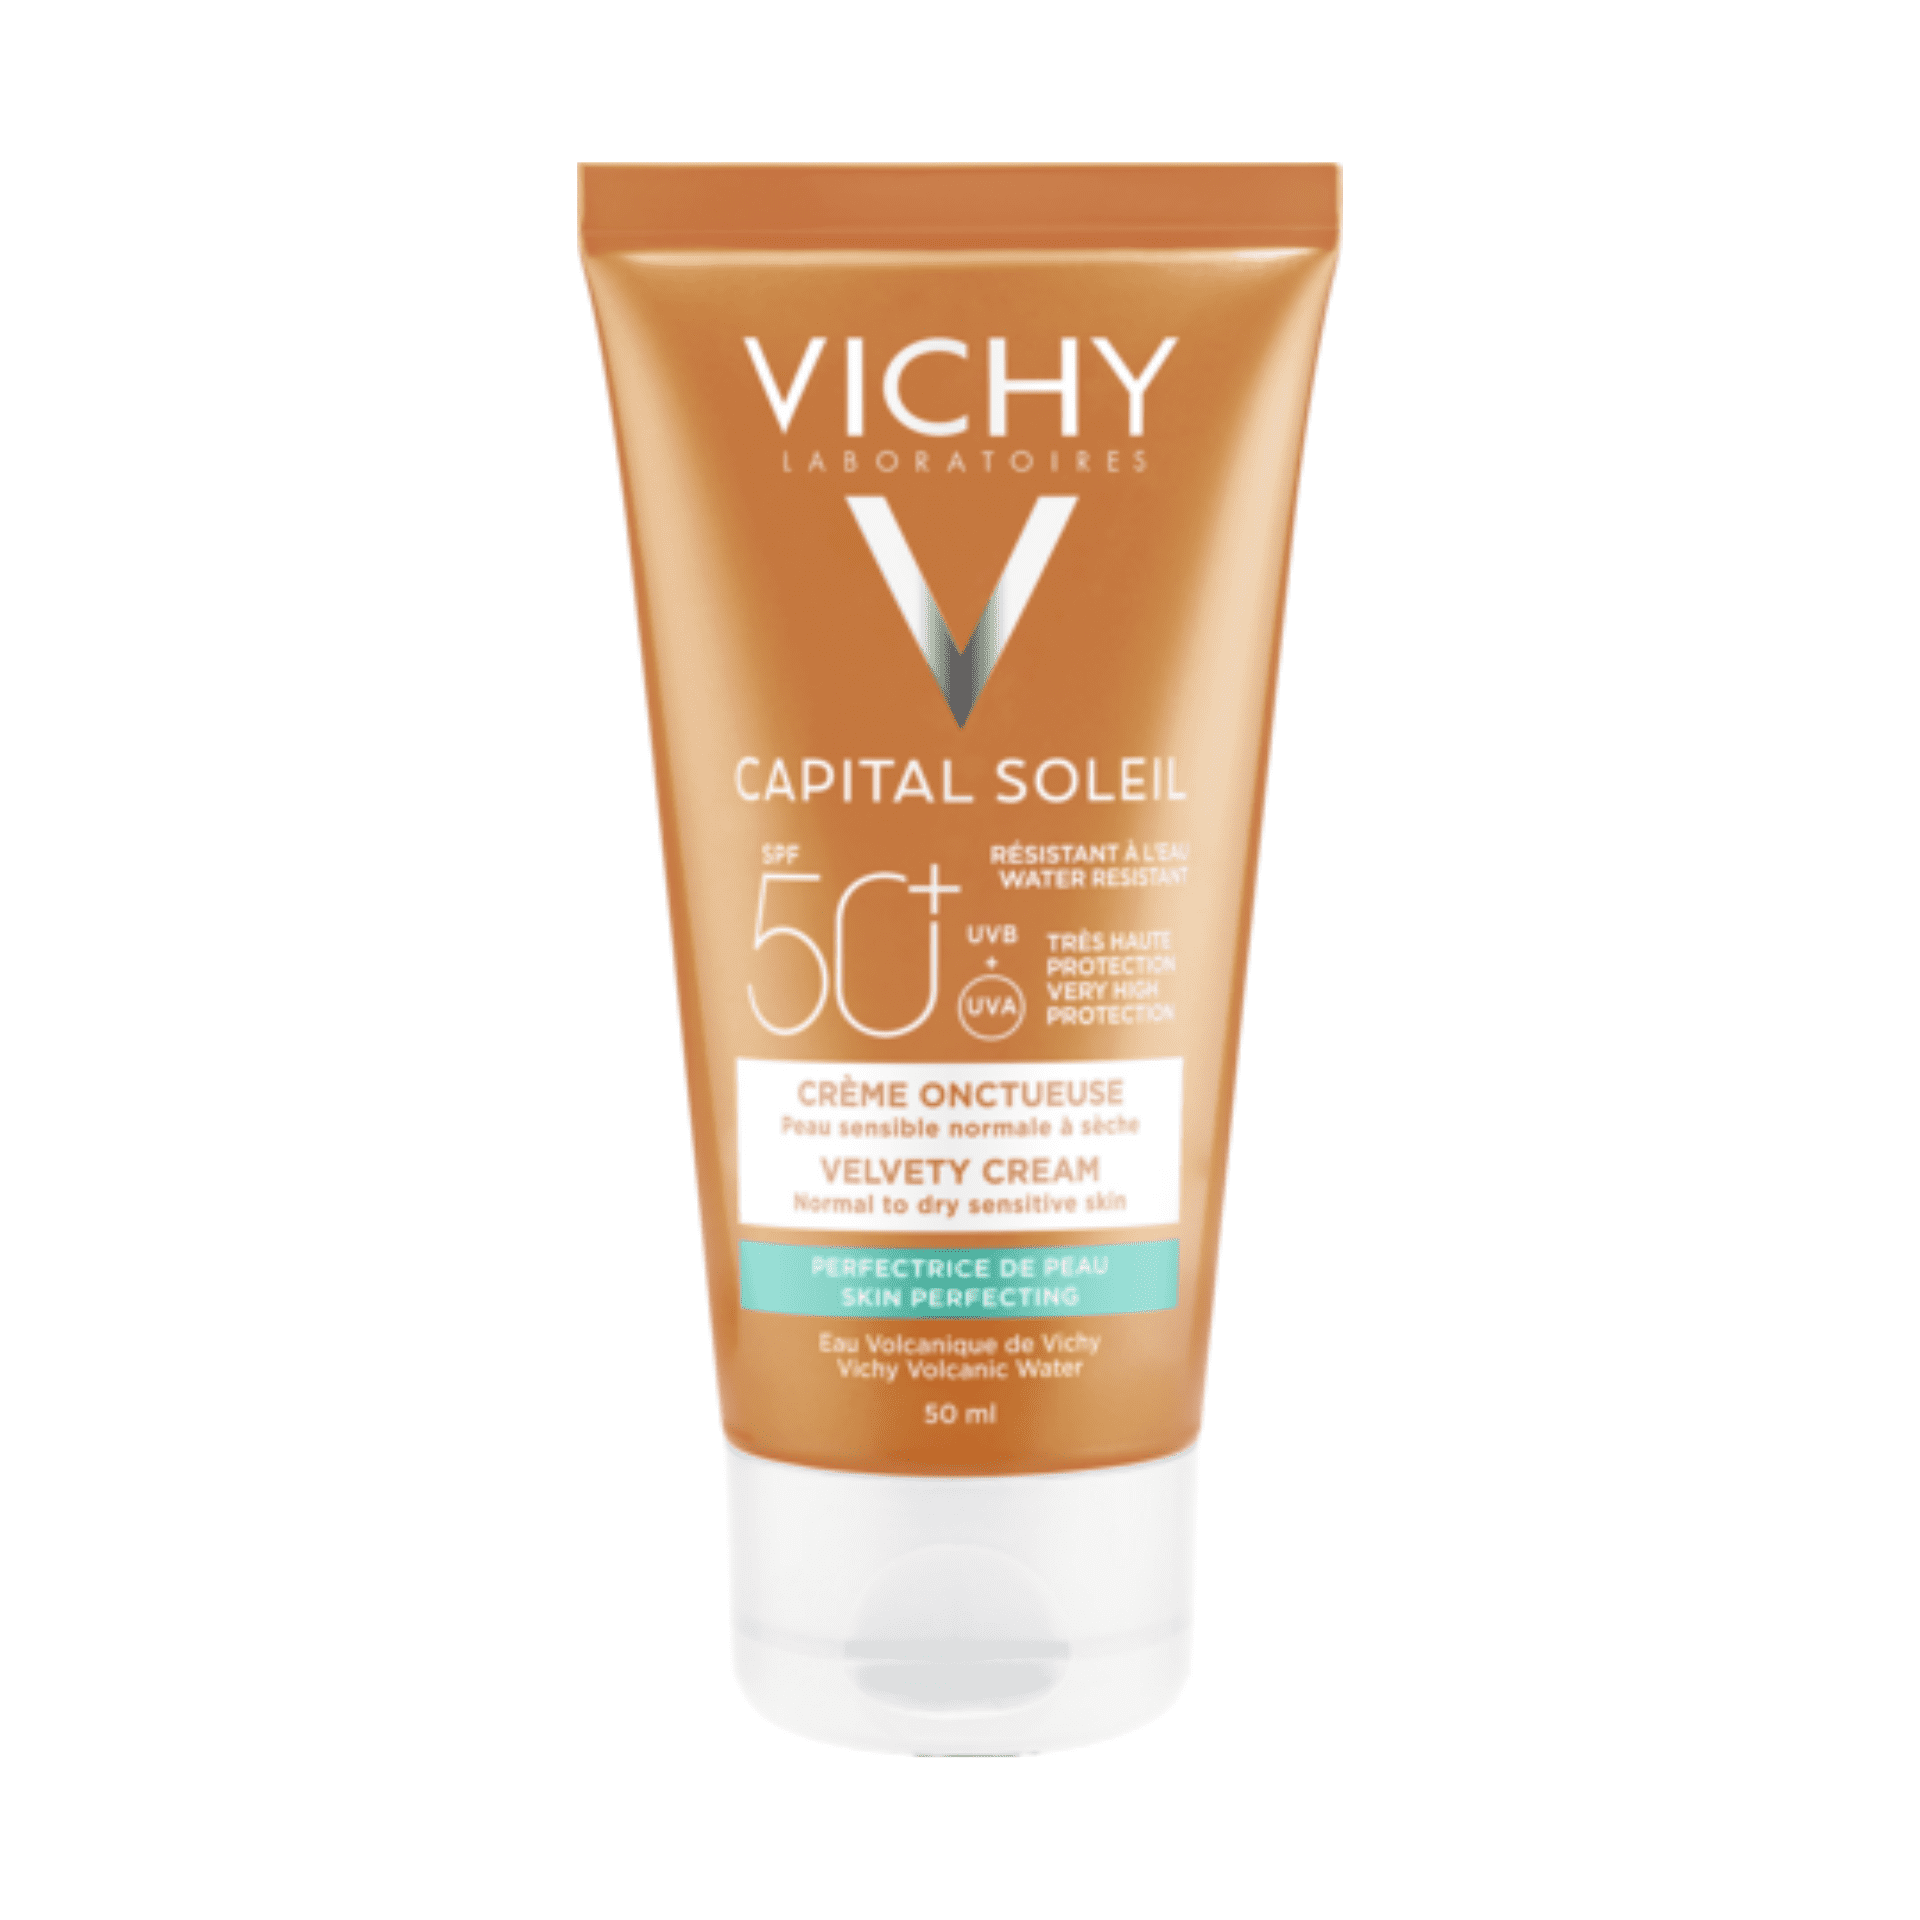 Vichy Capital Soleil SPF50+ Velvelty Cream